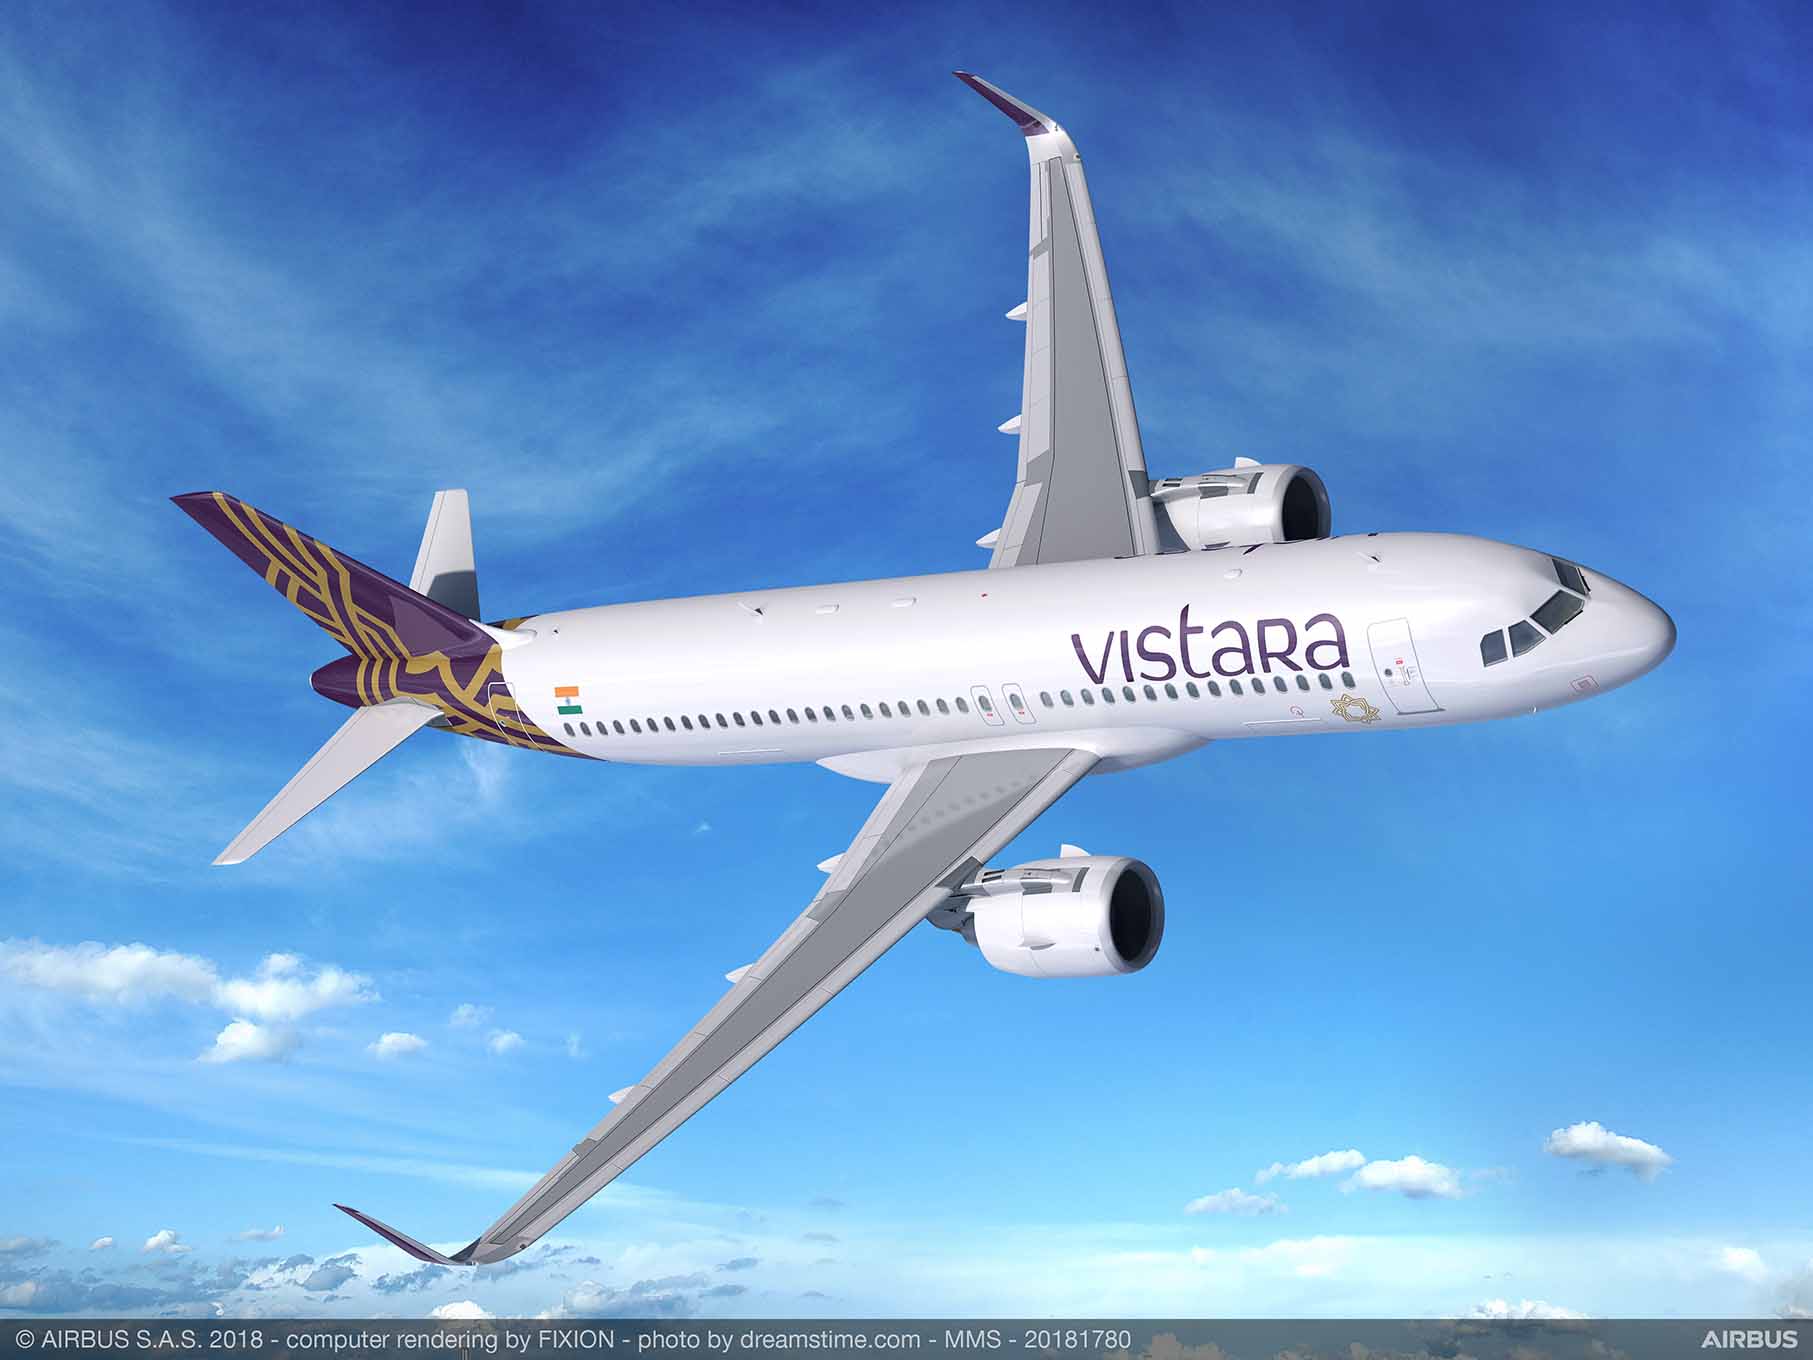 VISTARA to add 50 Airbus A320neo Family aircraft to fleet